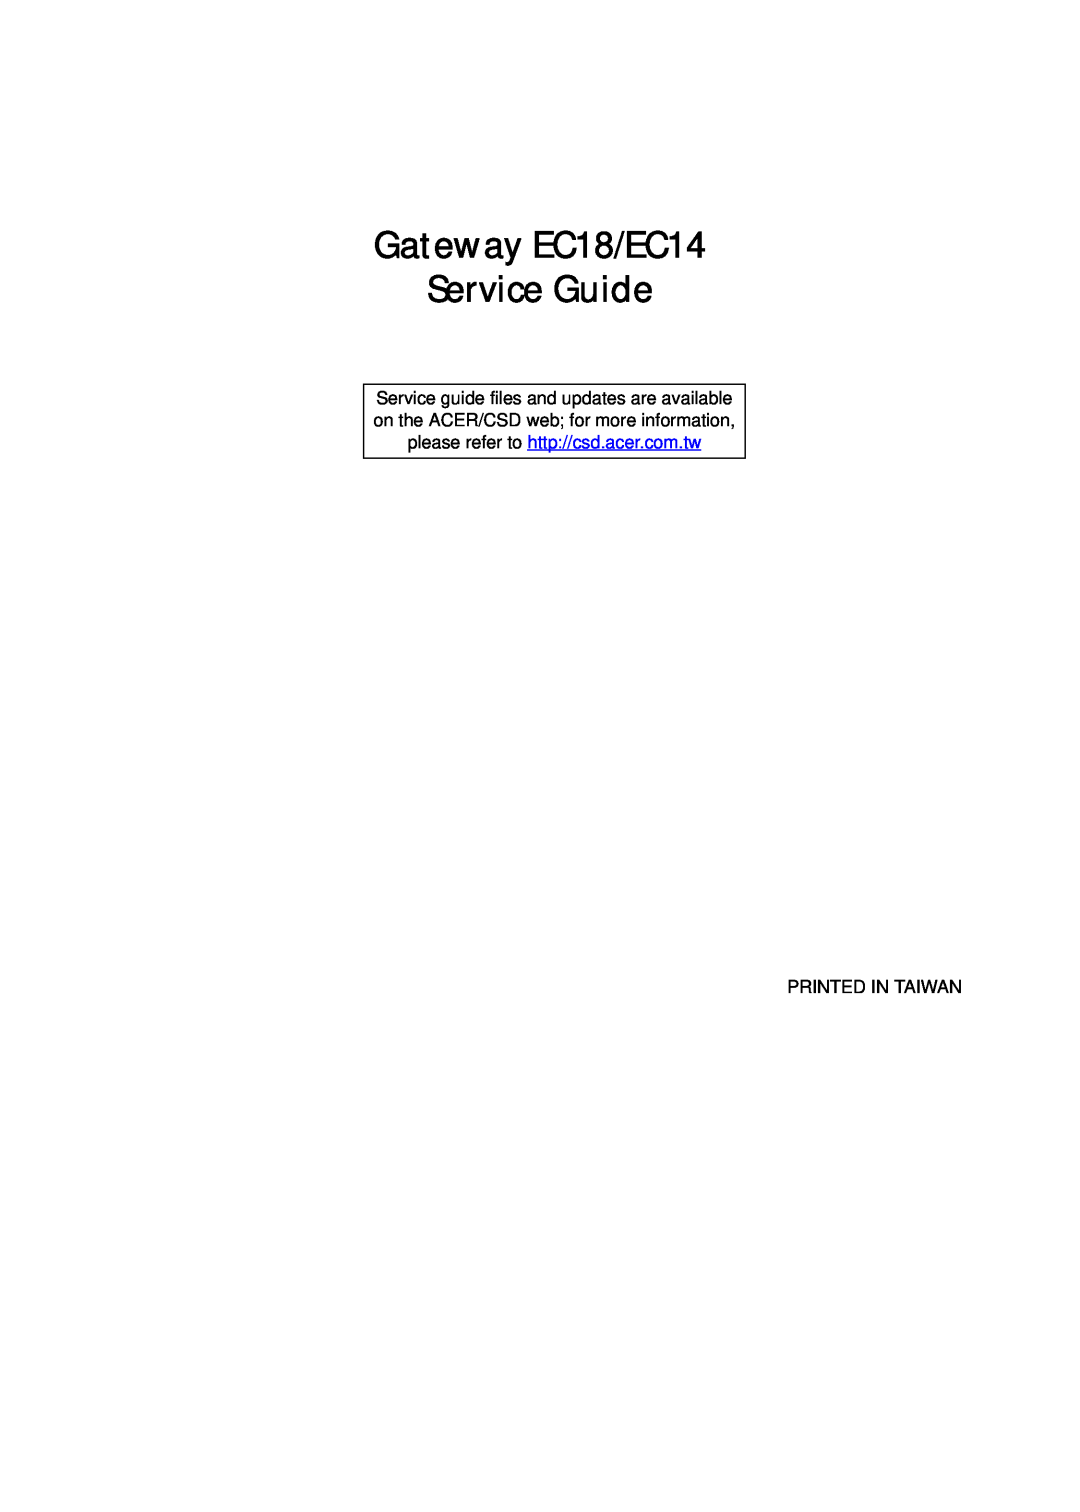 Gateway manual Gateway EC18/EC14 Service Guide, Printed In Taiwan 